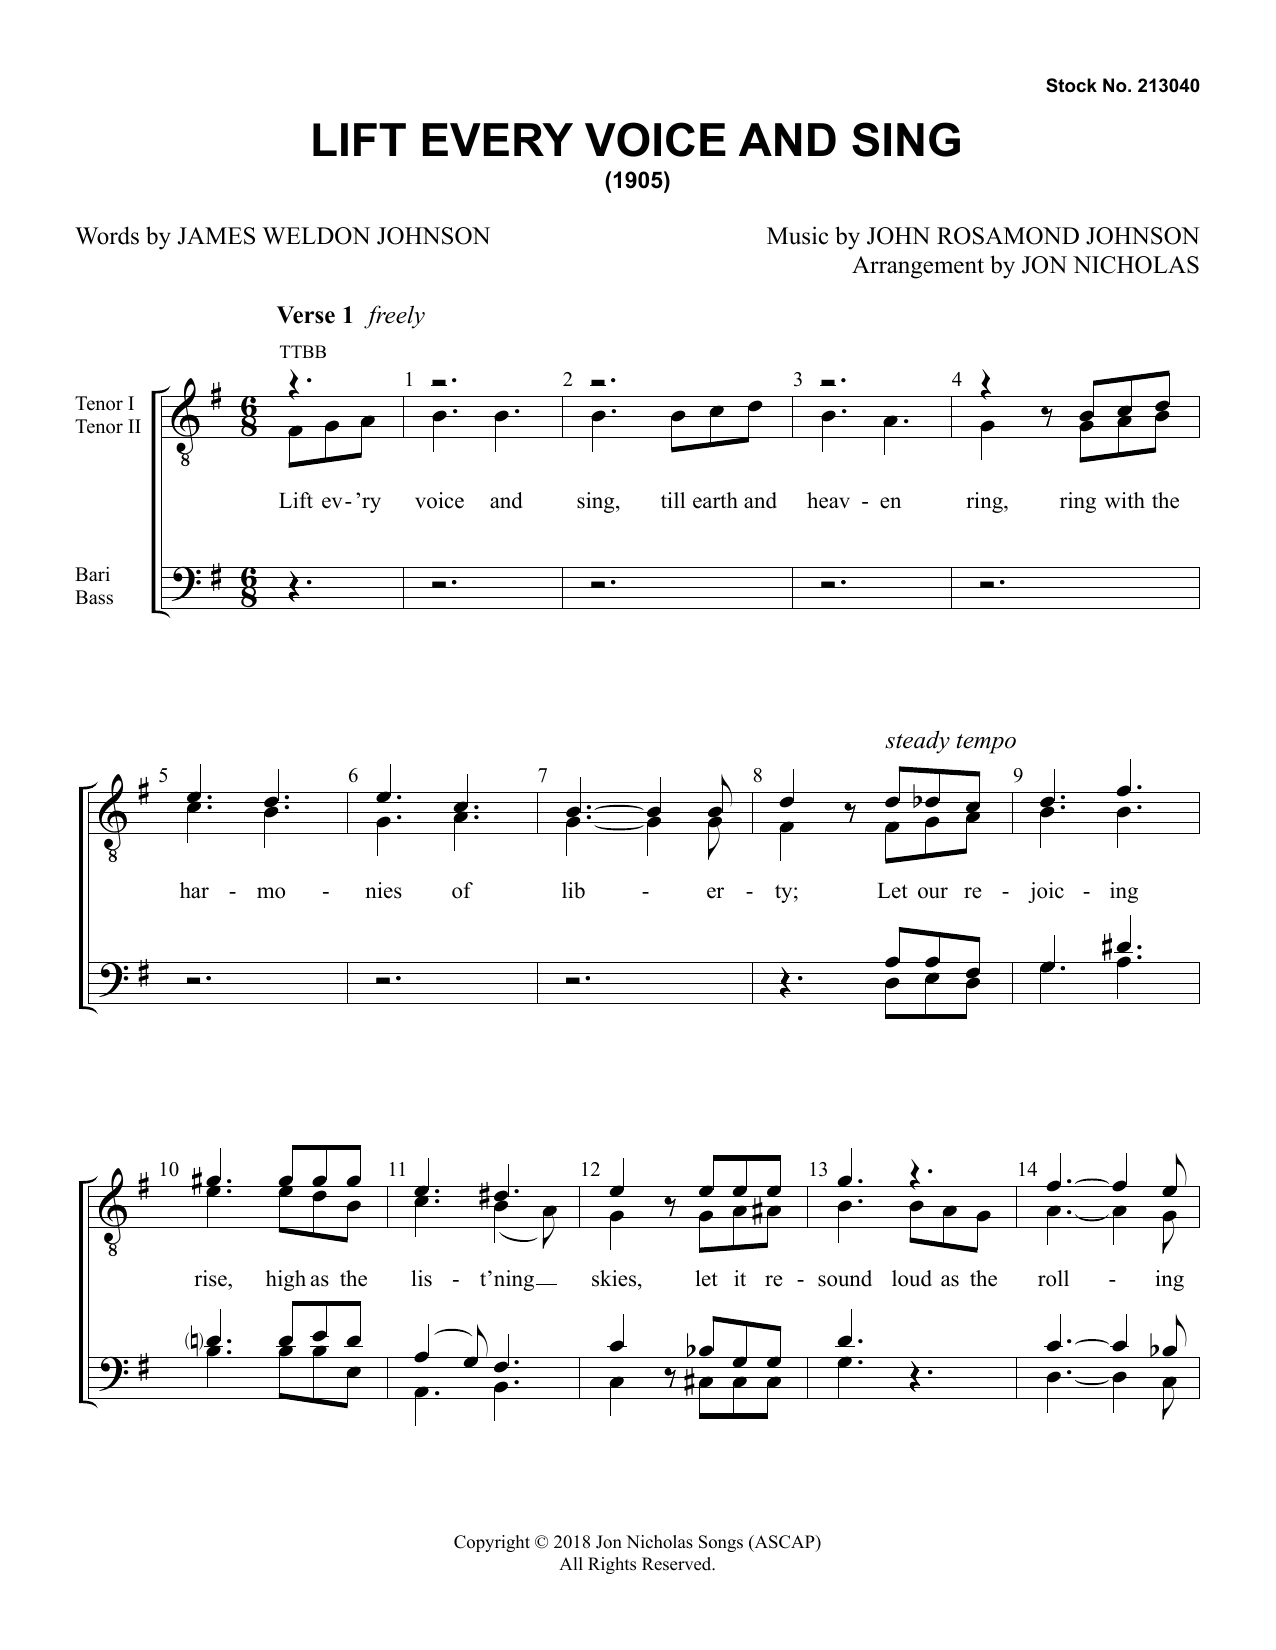 John Rosamond Johnson Lift Every Voice and Sing (arr. Jon Nicholas) Sheet Music Notes & Chords for Choir - Download or Print PDF